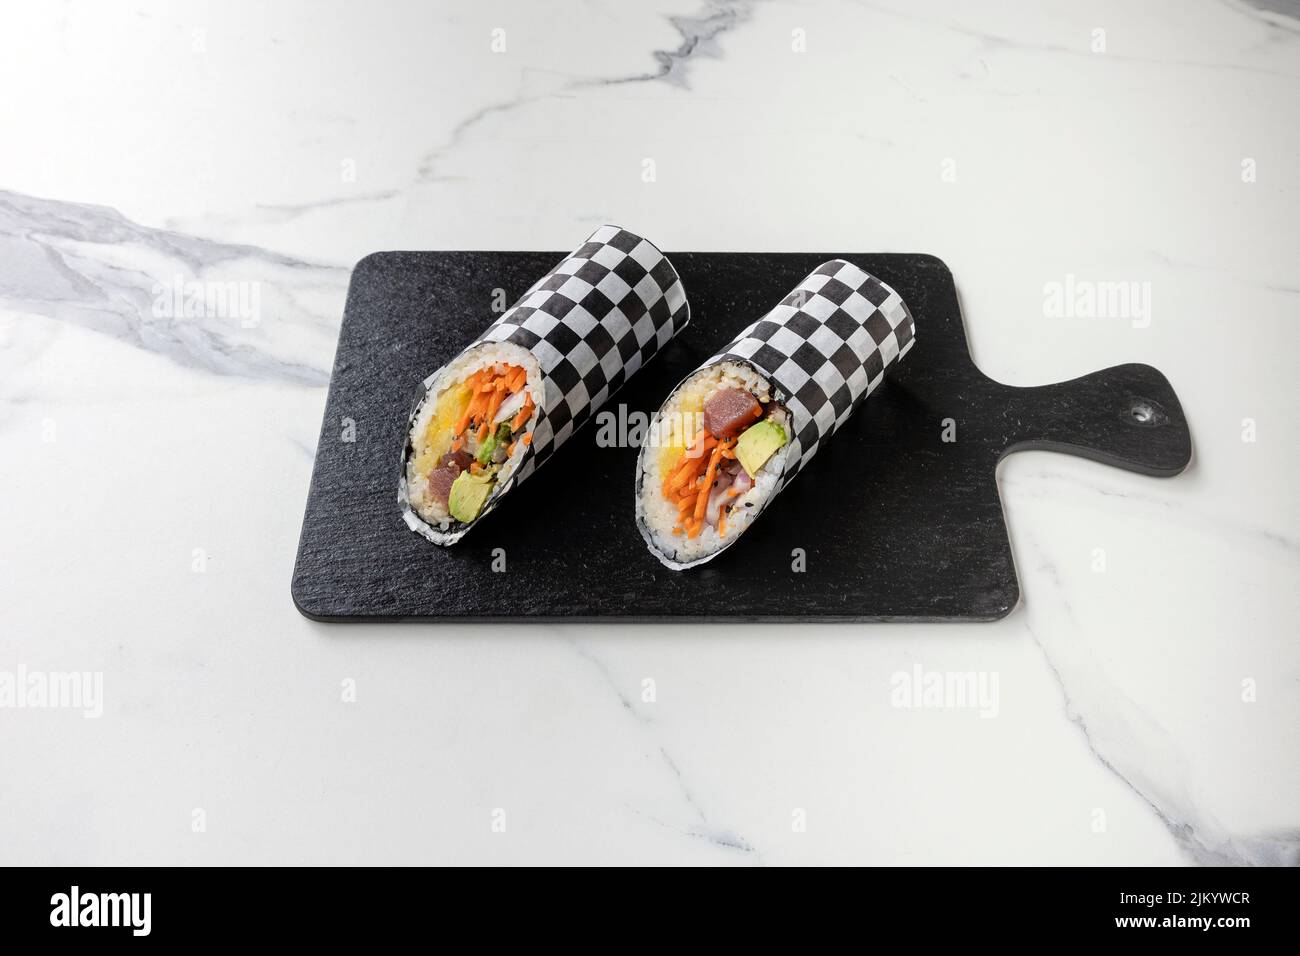 https://c8.alamy.com/comp/2JKYWCR/a-closeup-shot-of-a-sushi-roll-in-black-and-white-wrapper-on-a-dark-board-2JKYWCR.jpg